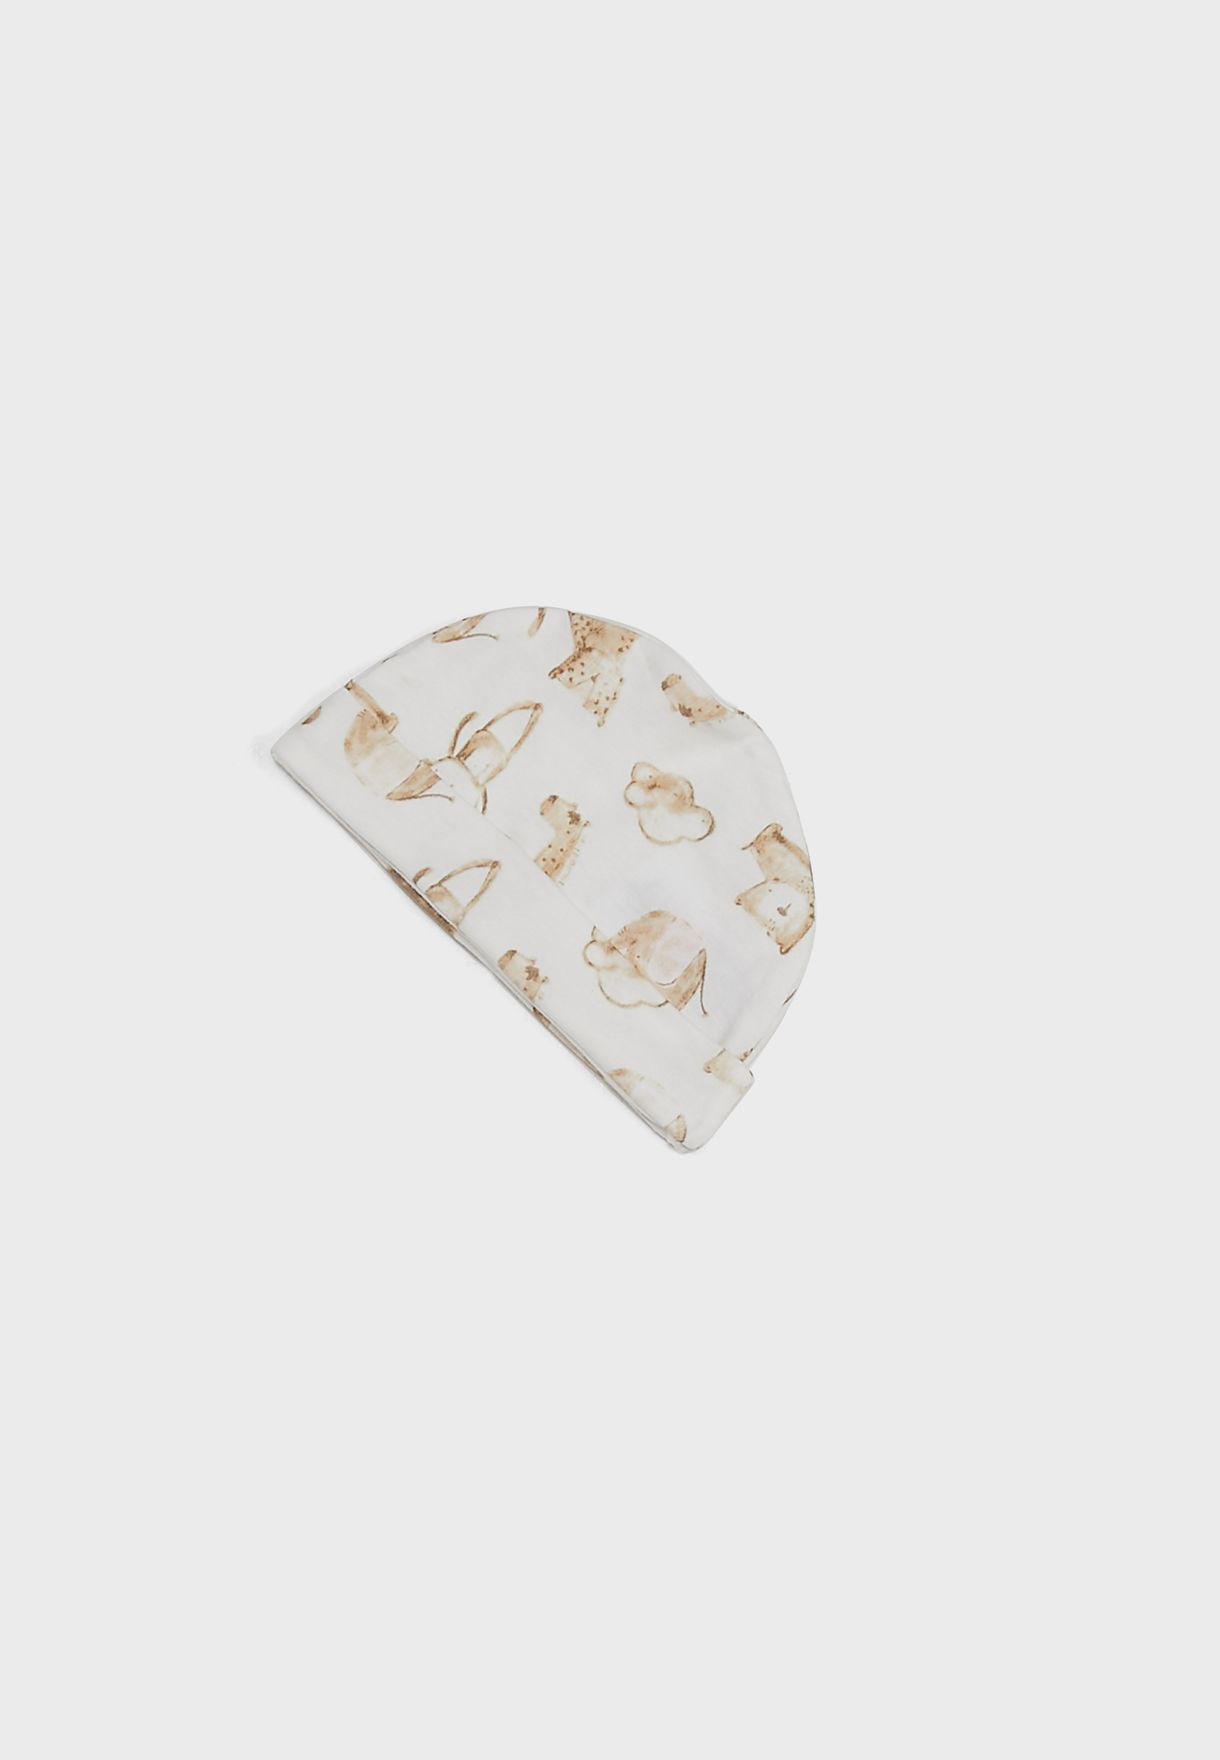 Infant Animal Print Sleep suit + Hat And Bib Set